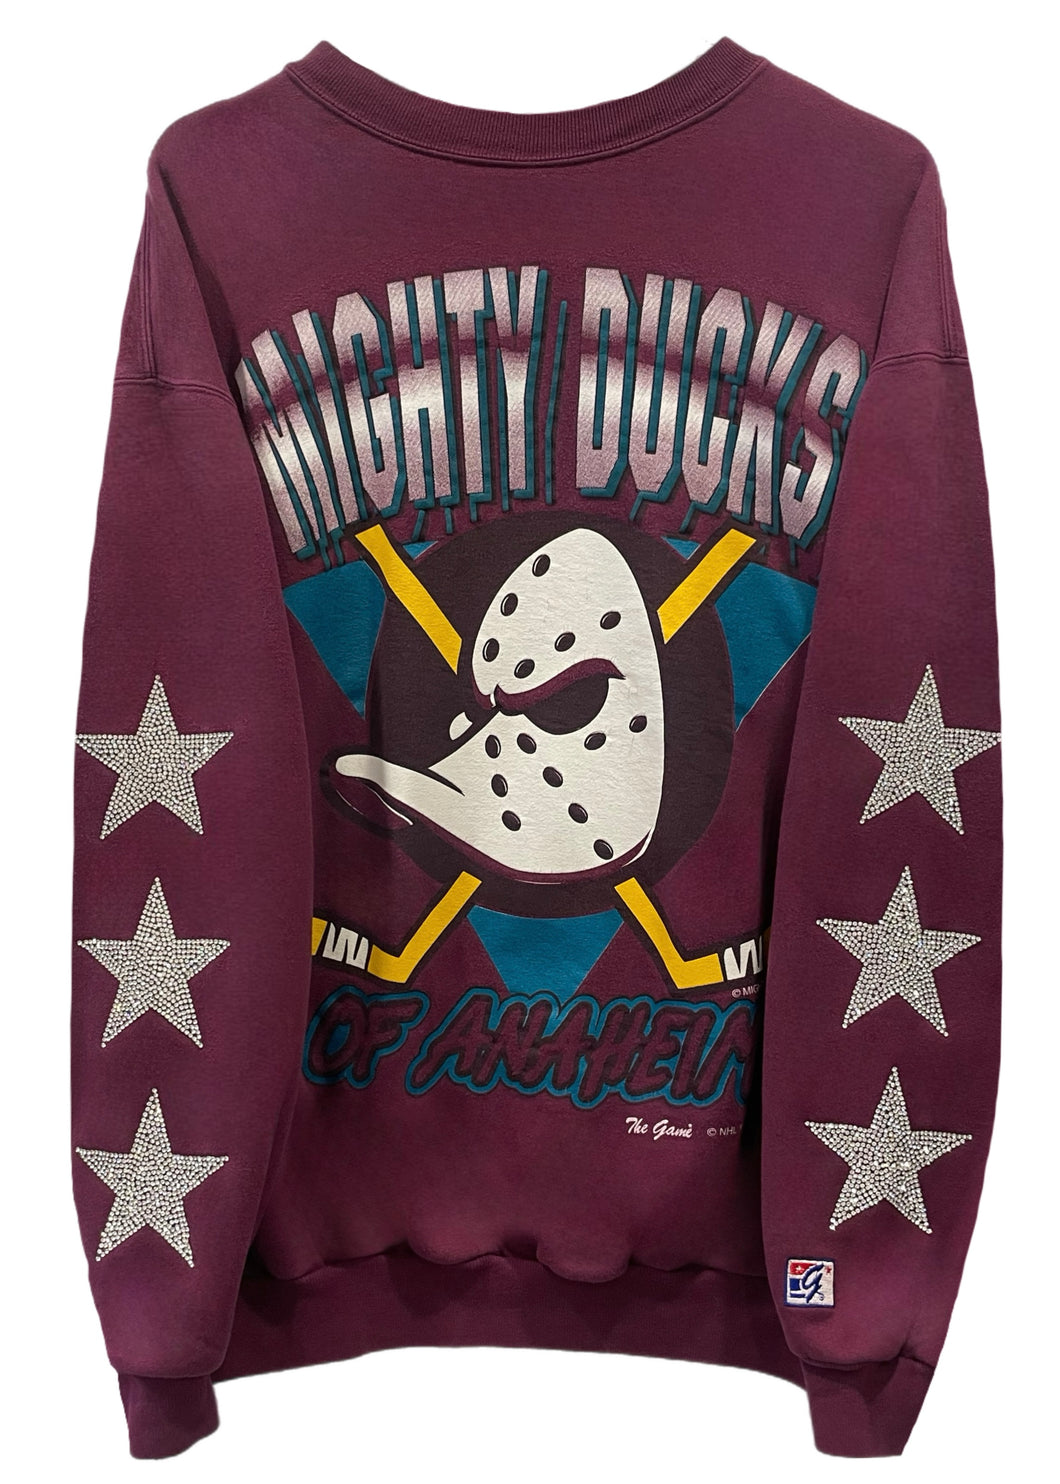 Anaheim Ducks, Hockey One of a KIND Vintage “Mighty Ducks” Rare Find Sweatshirt with Three Crystal Star Design